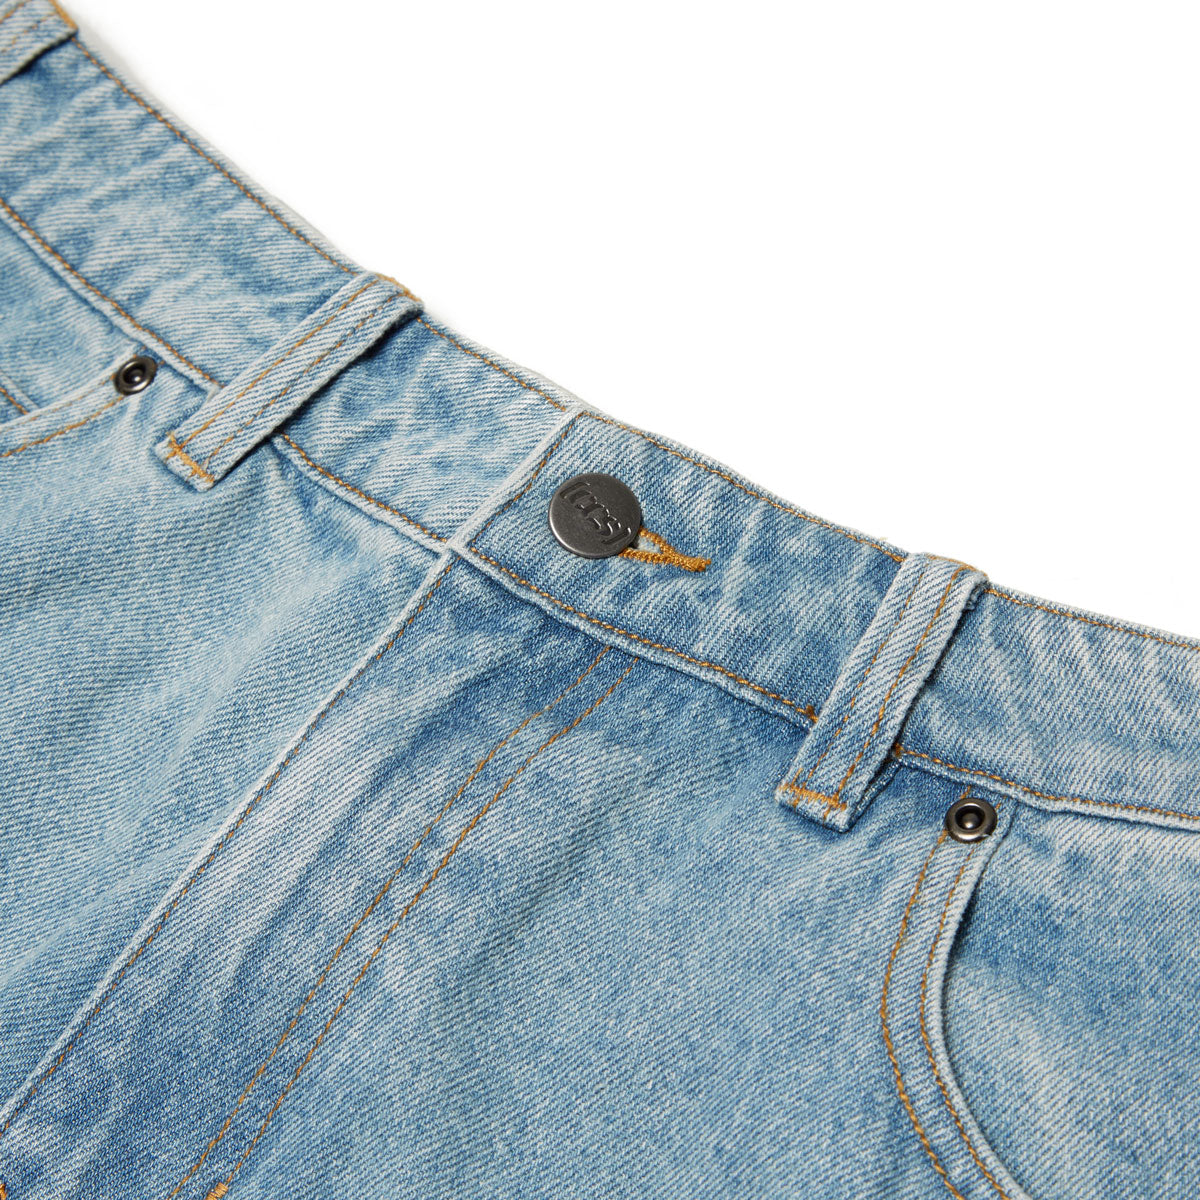 CCS Baggy Taper Denim Jeans - Light Wash image 8